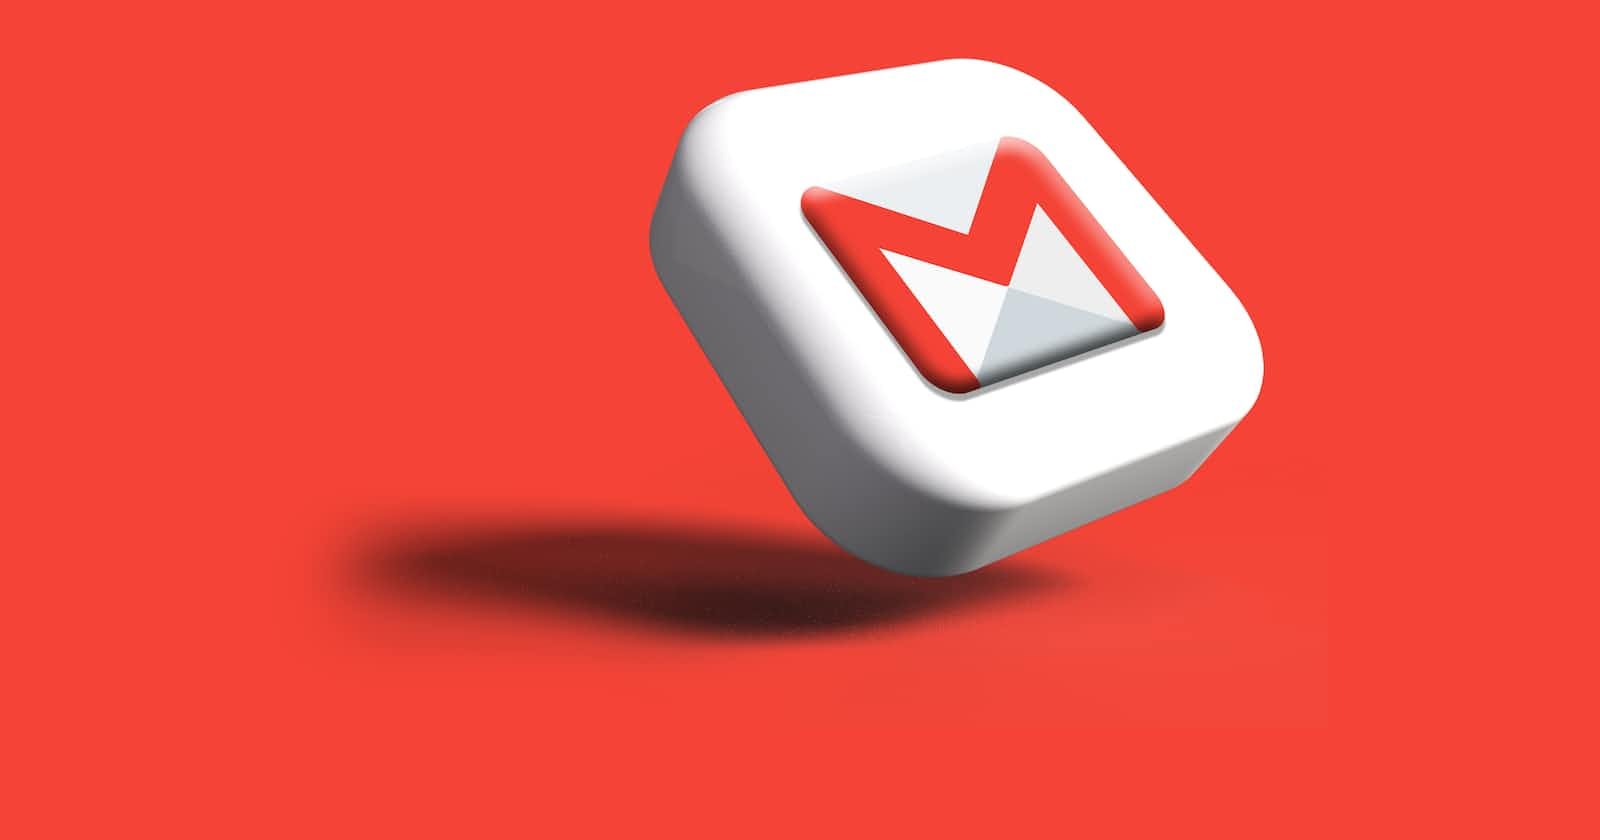 Gmail: Send A Mail Automatically